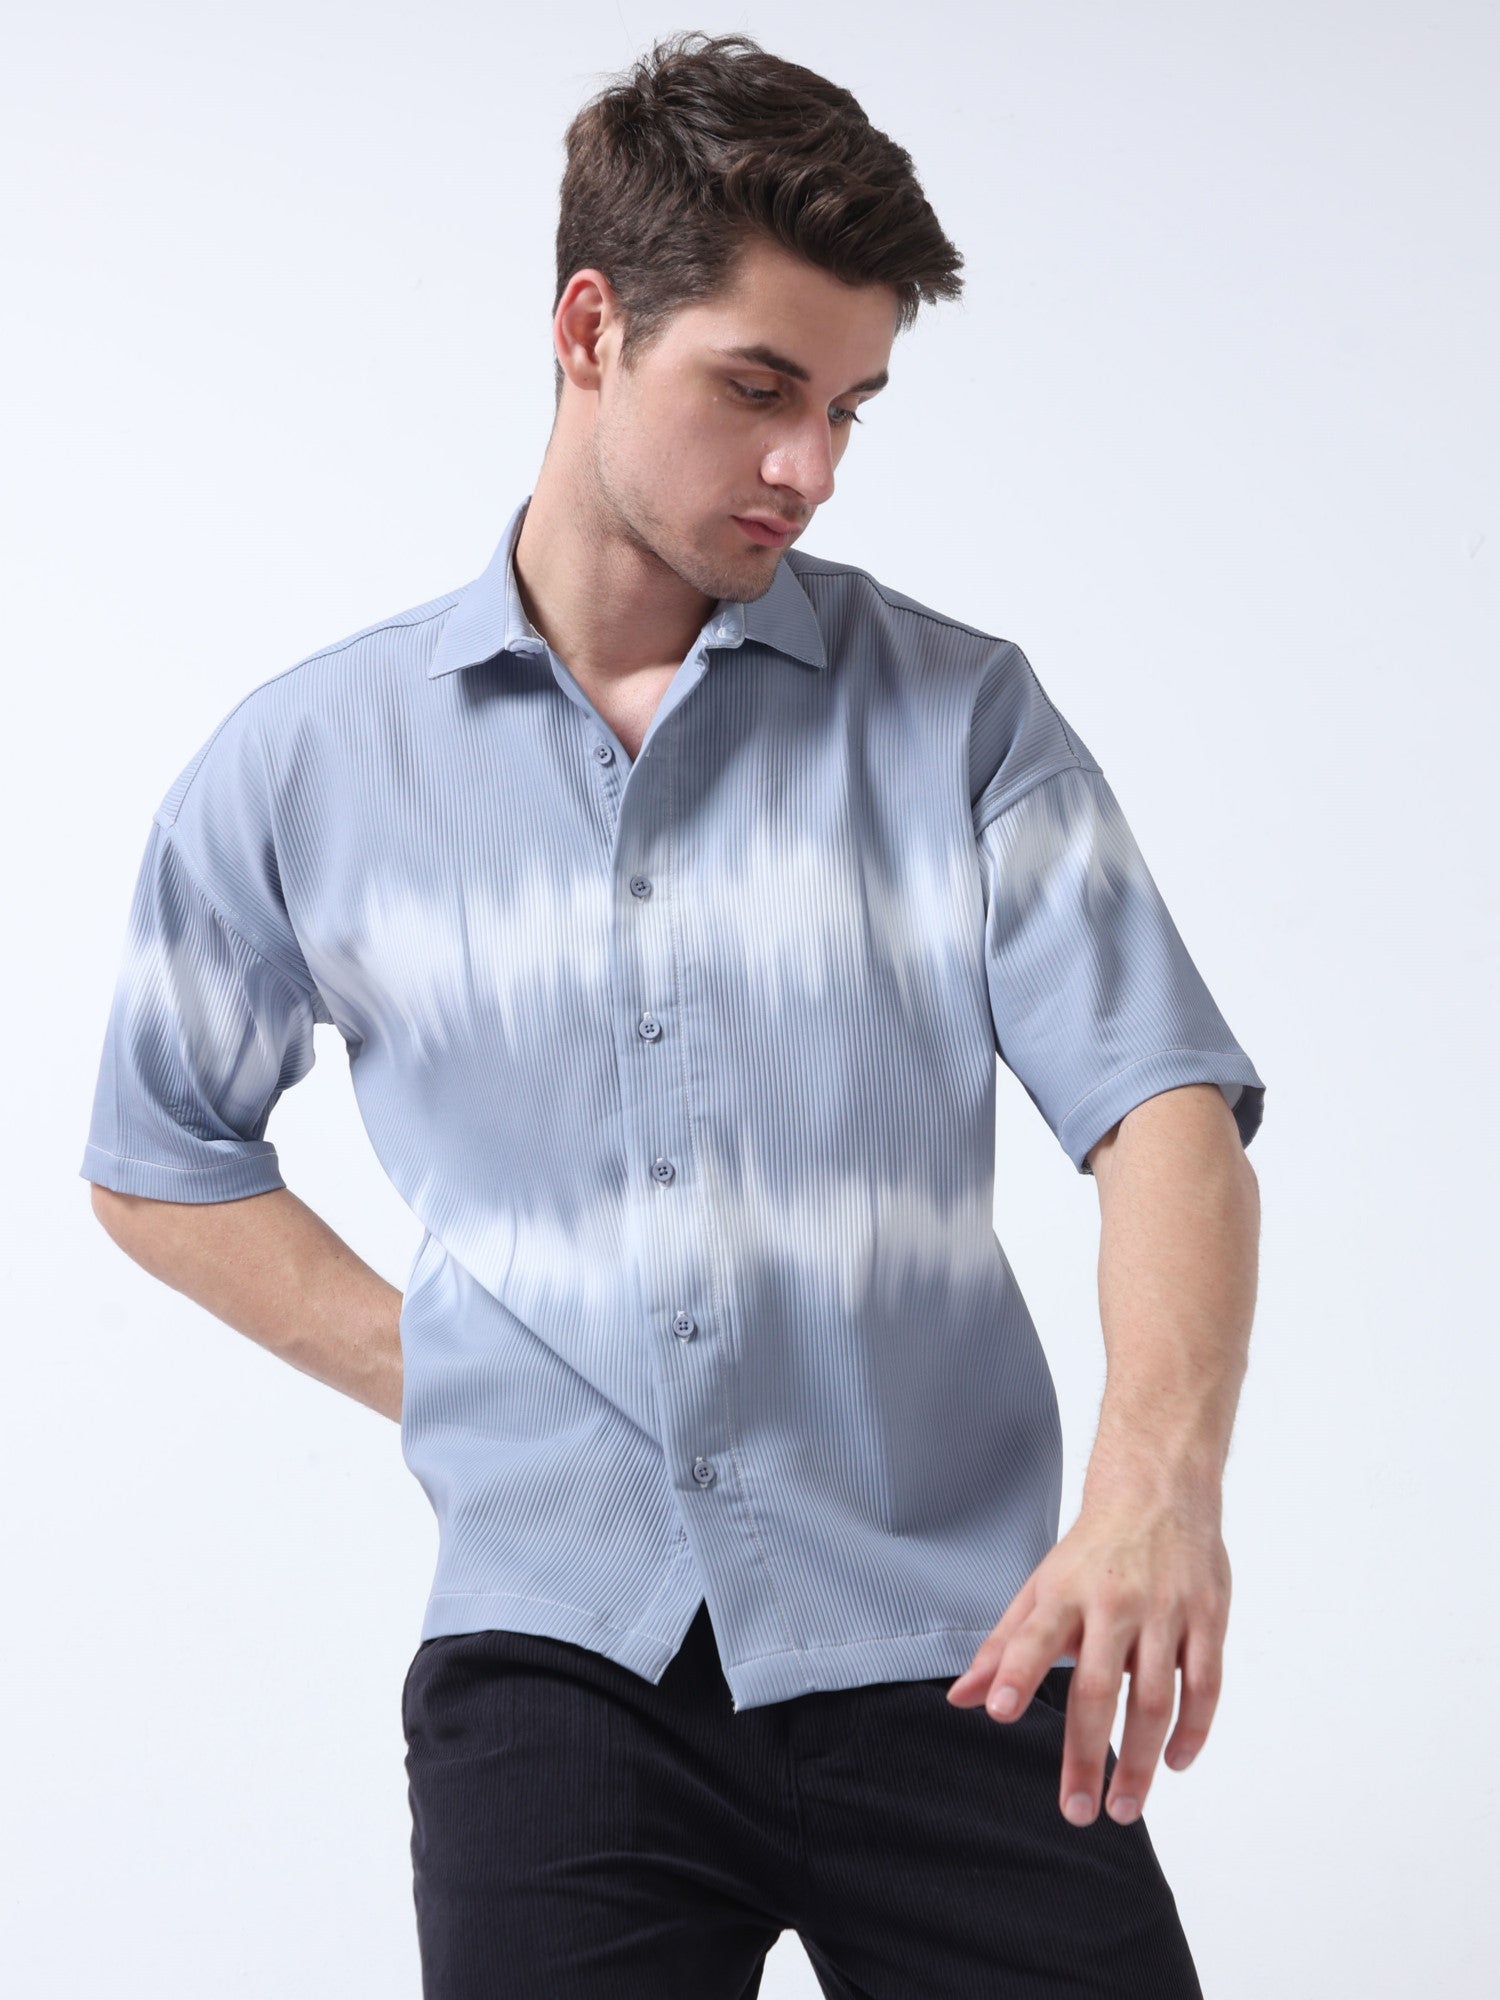 Ash White Men's ChromaPalette Drop Shoulder Shirt